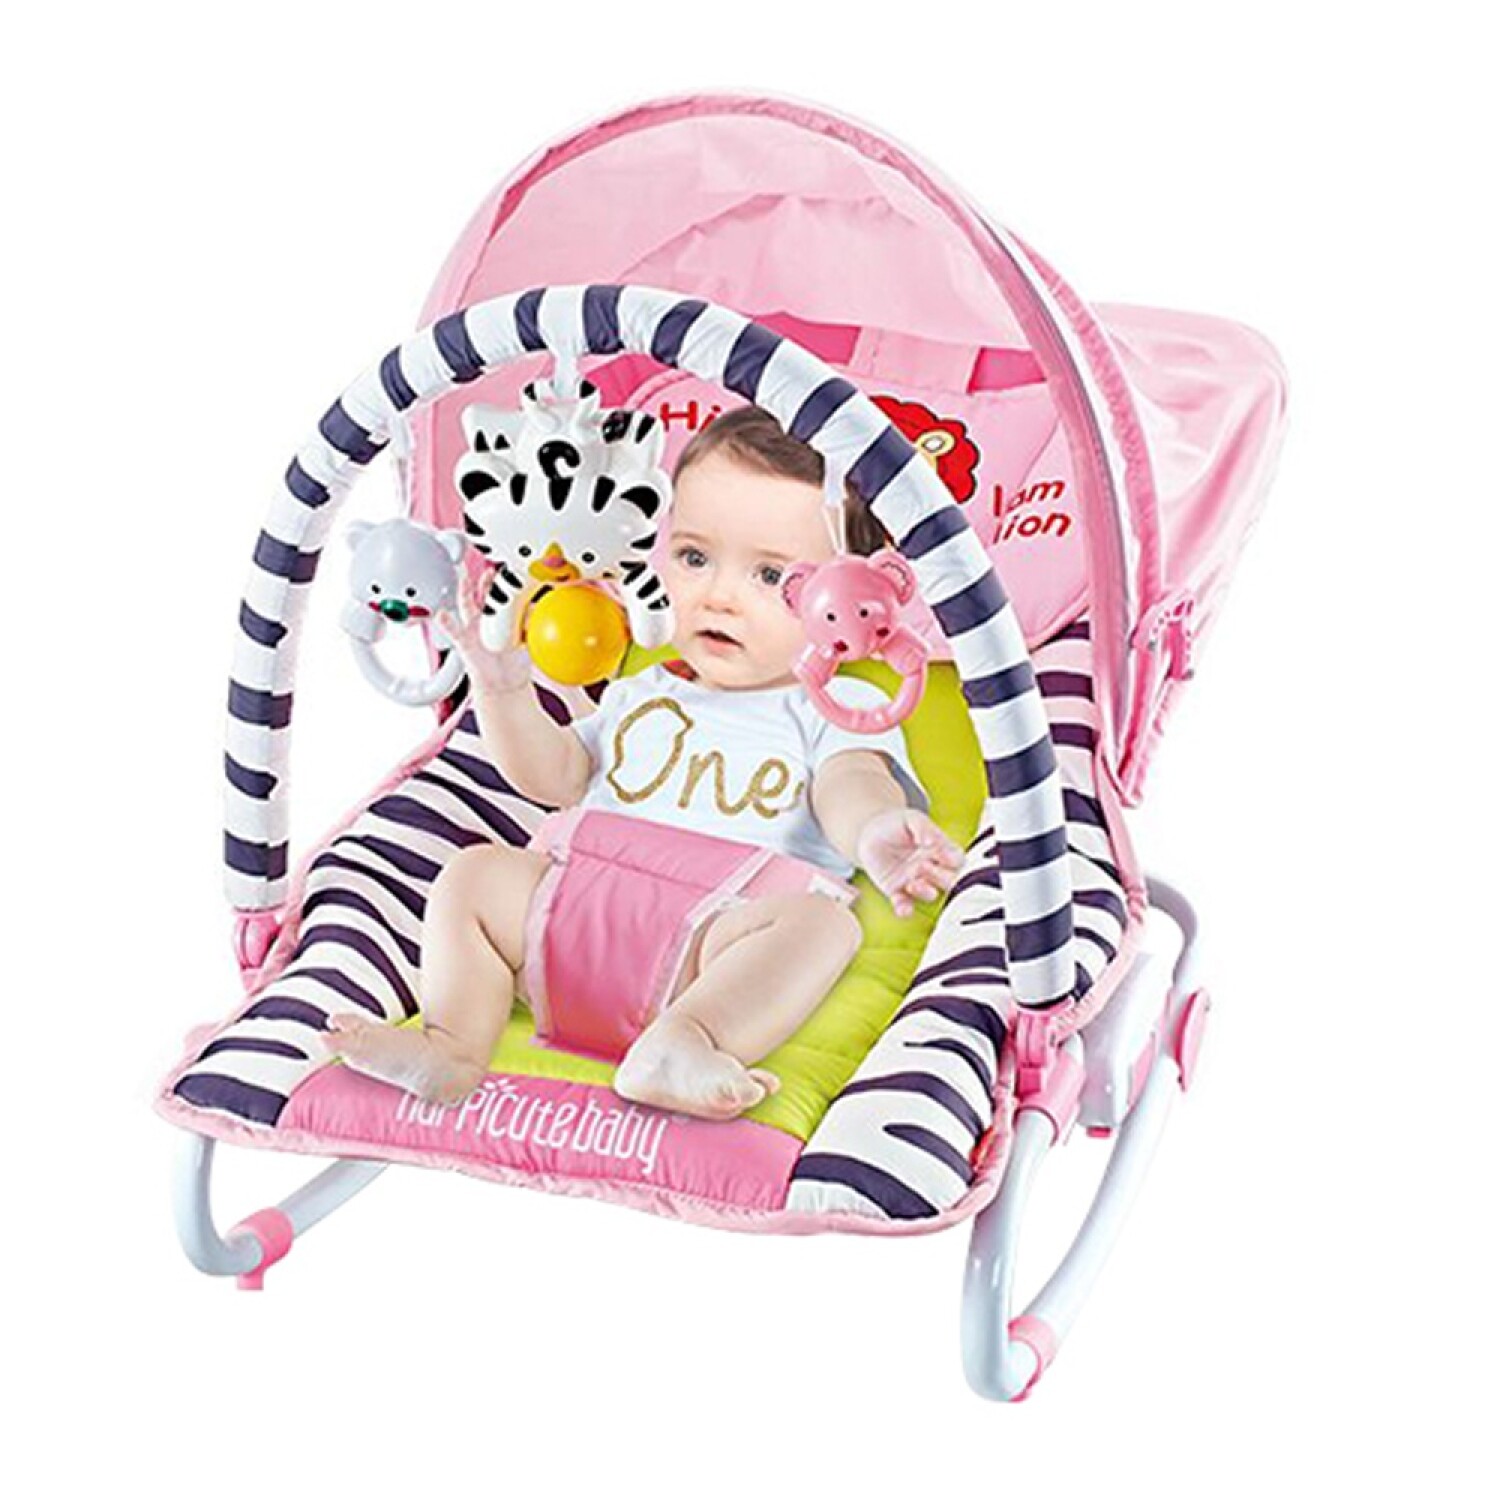 https://f.fcdn.app/imgs/8de9d3/www.hastaterminarstock.com.uy/htsuy/0e18/original/catalogo/7332_Rosa_1/1500-1500/silla-mecedora-bebe-reclinable-cama-plegable-portable-capota-rosa.jpg